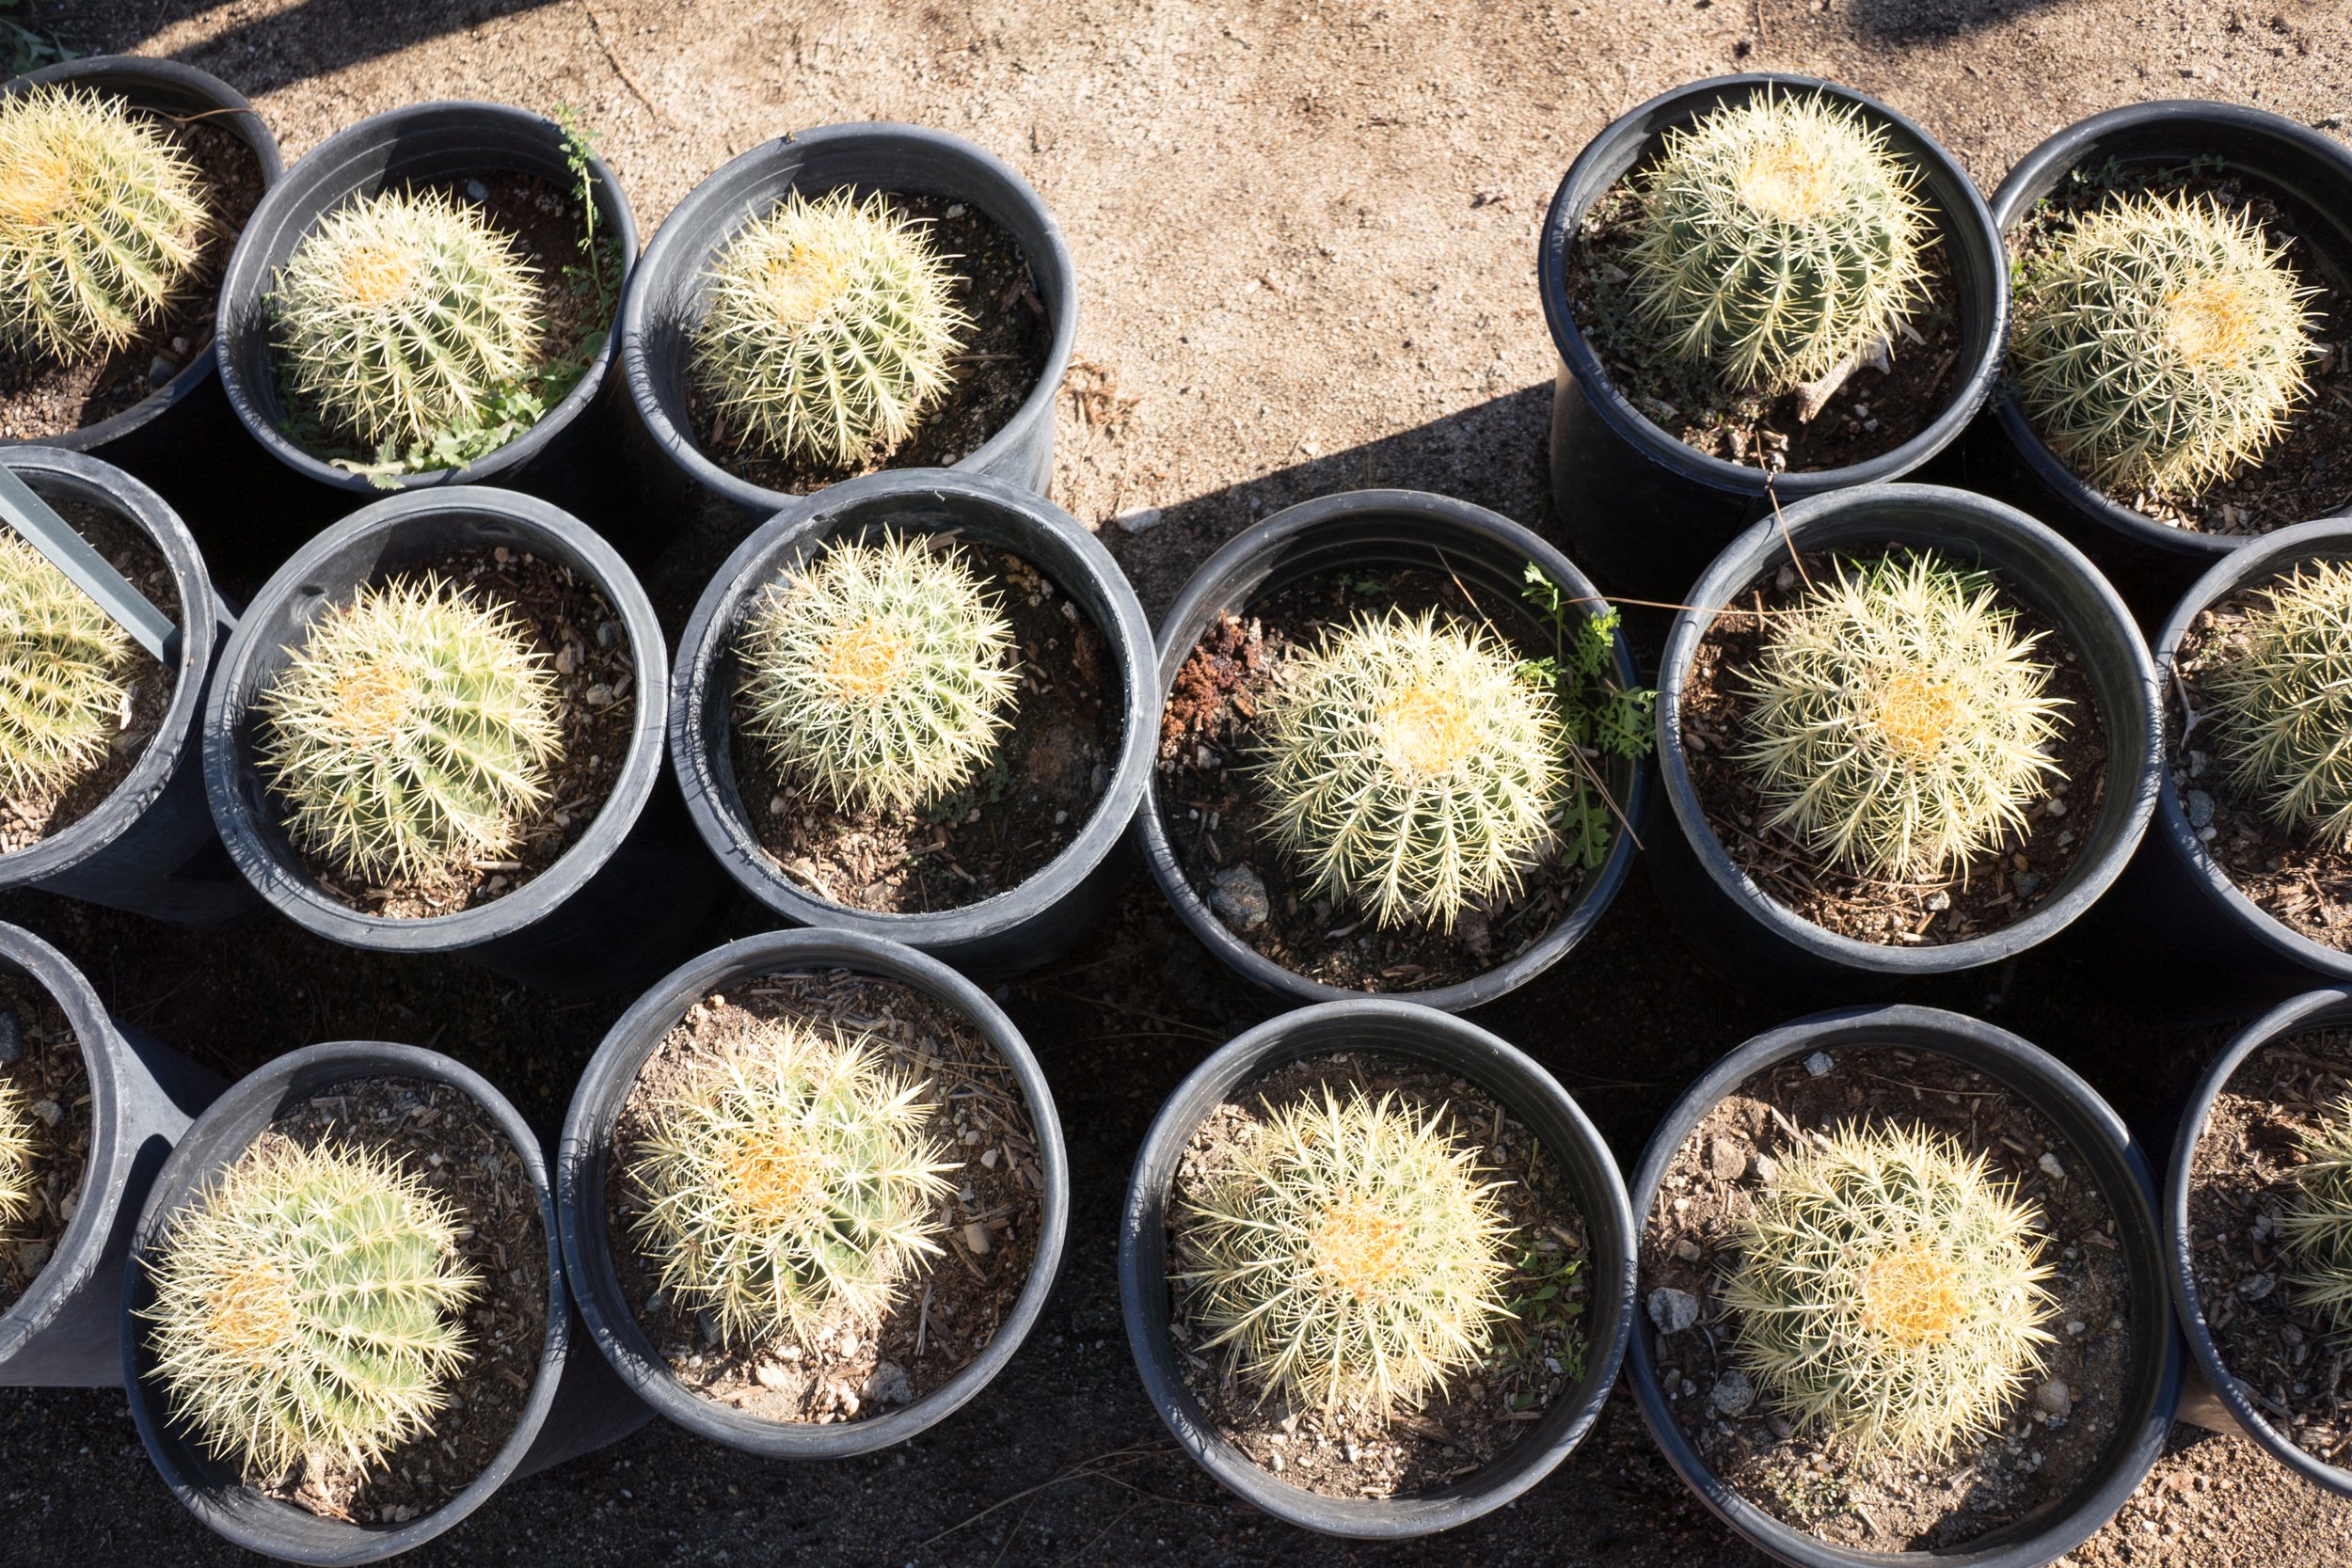 Golden Barrel Cactus — GDNC Nursery